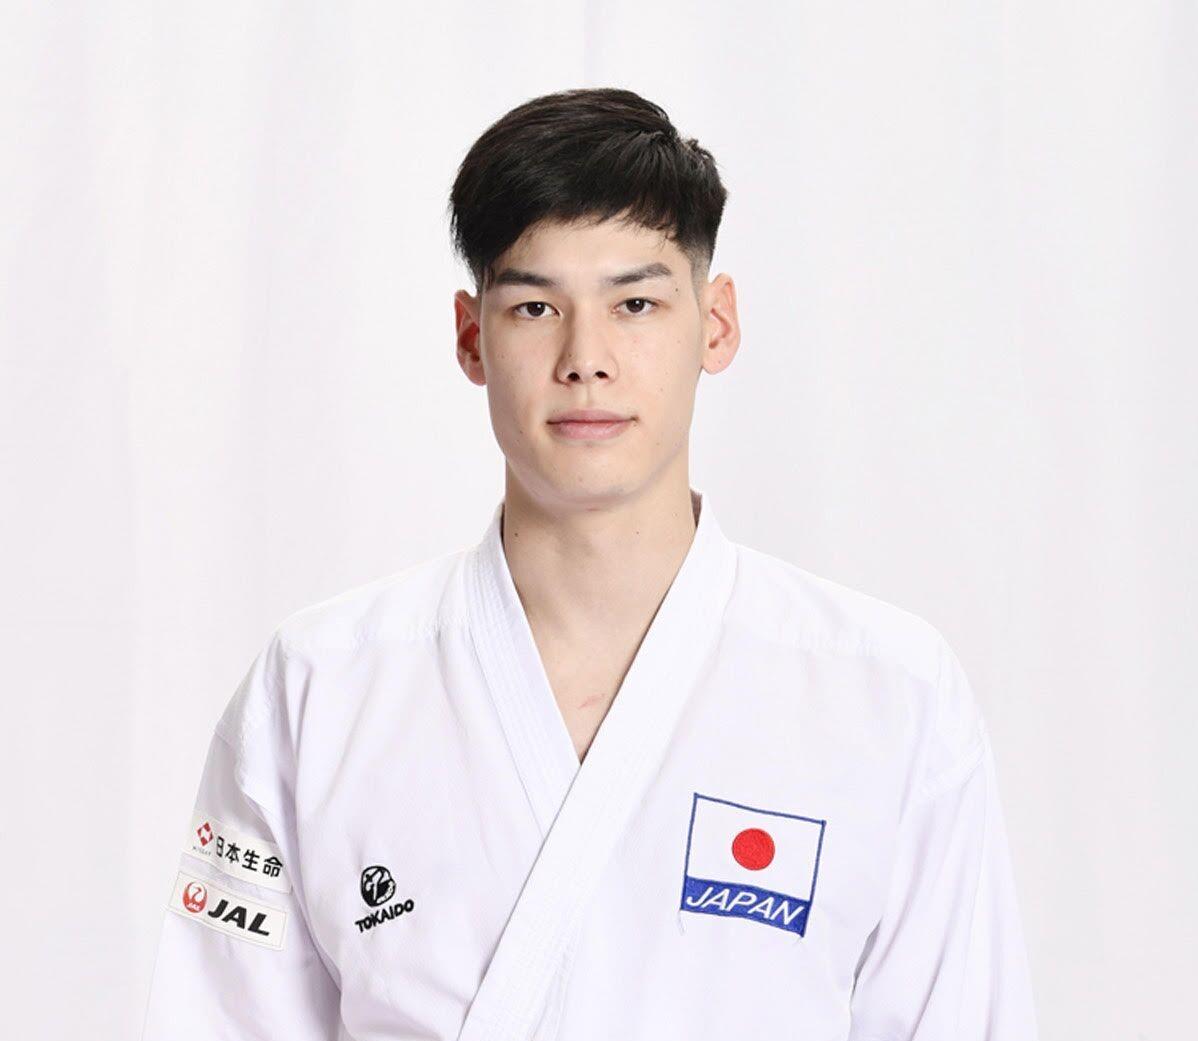 Karateka Ken Nishimura reignites passion for sport during coronavirus crisis (Source: The Japan Times)